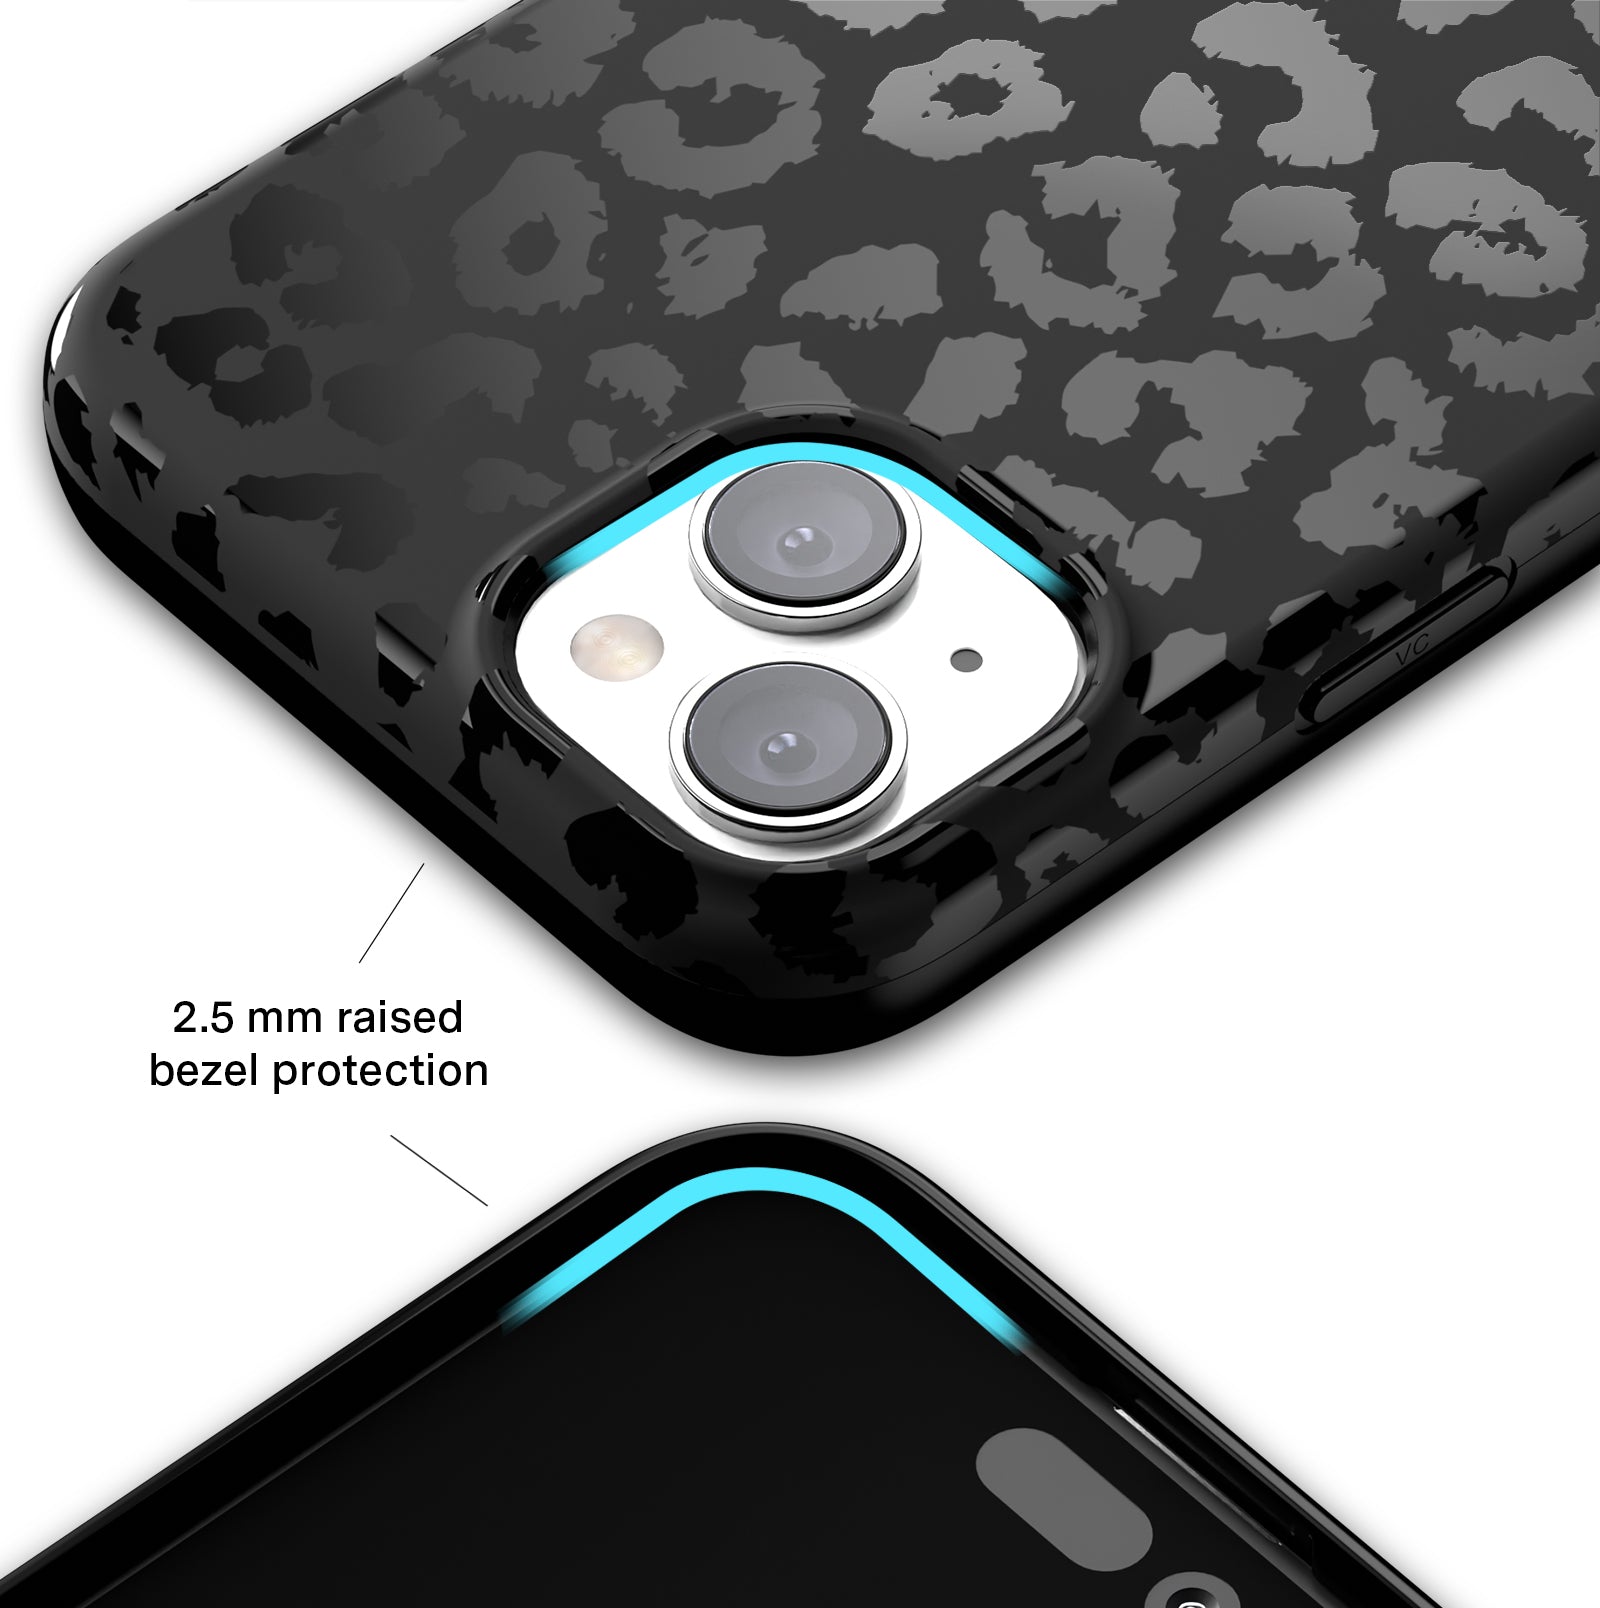 Key Lime Leopard iPhone Case –